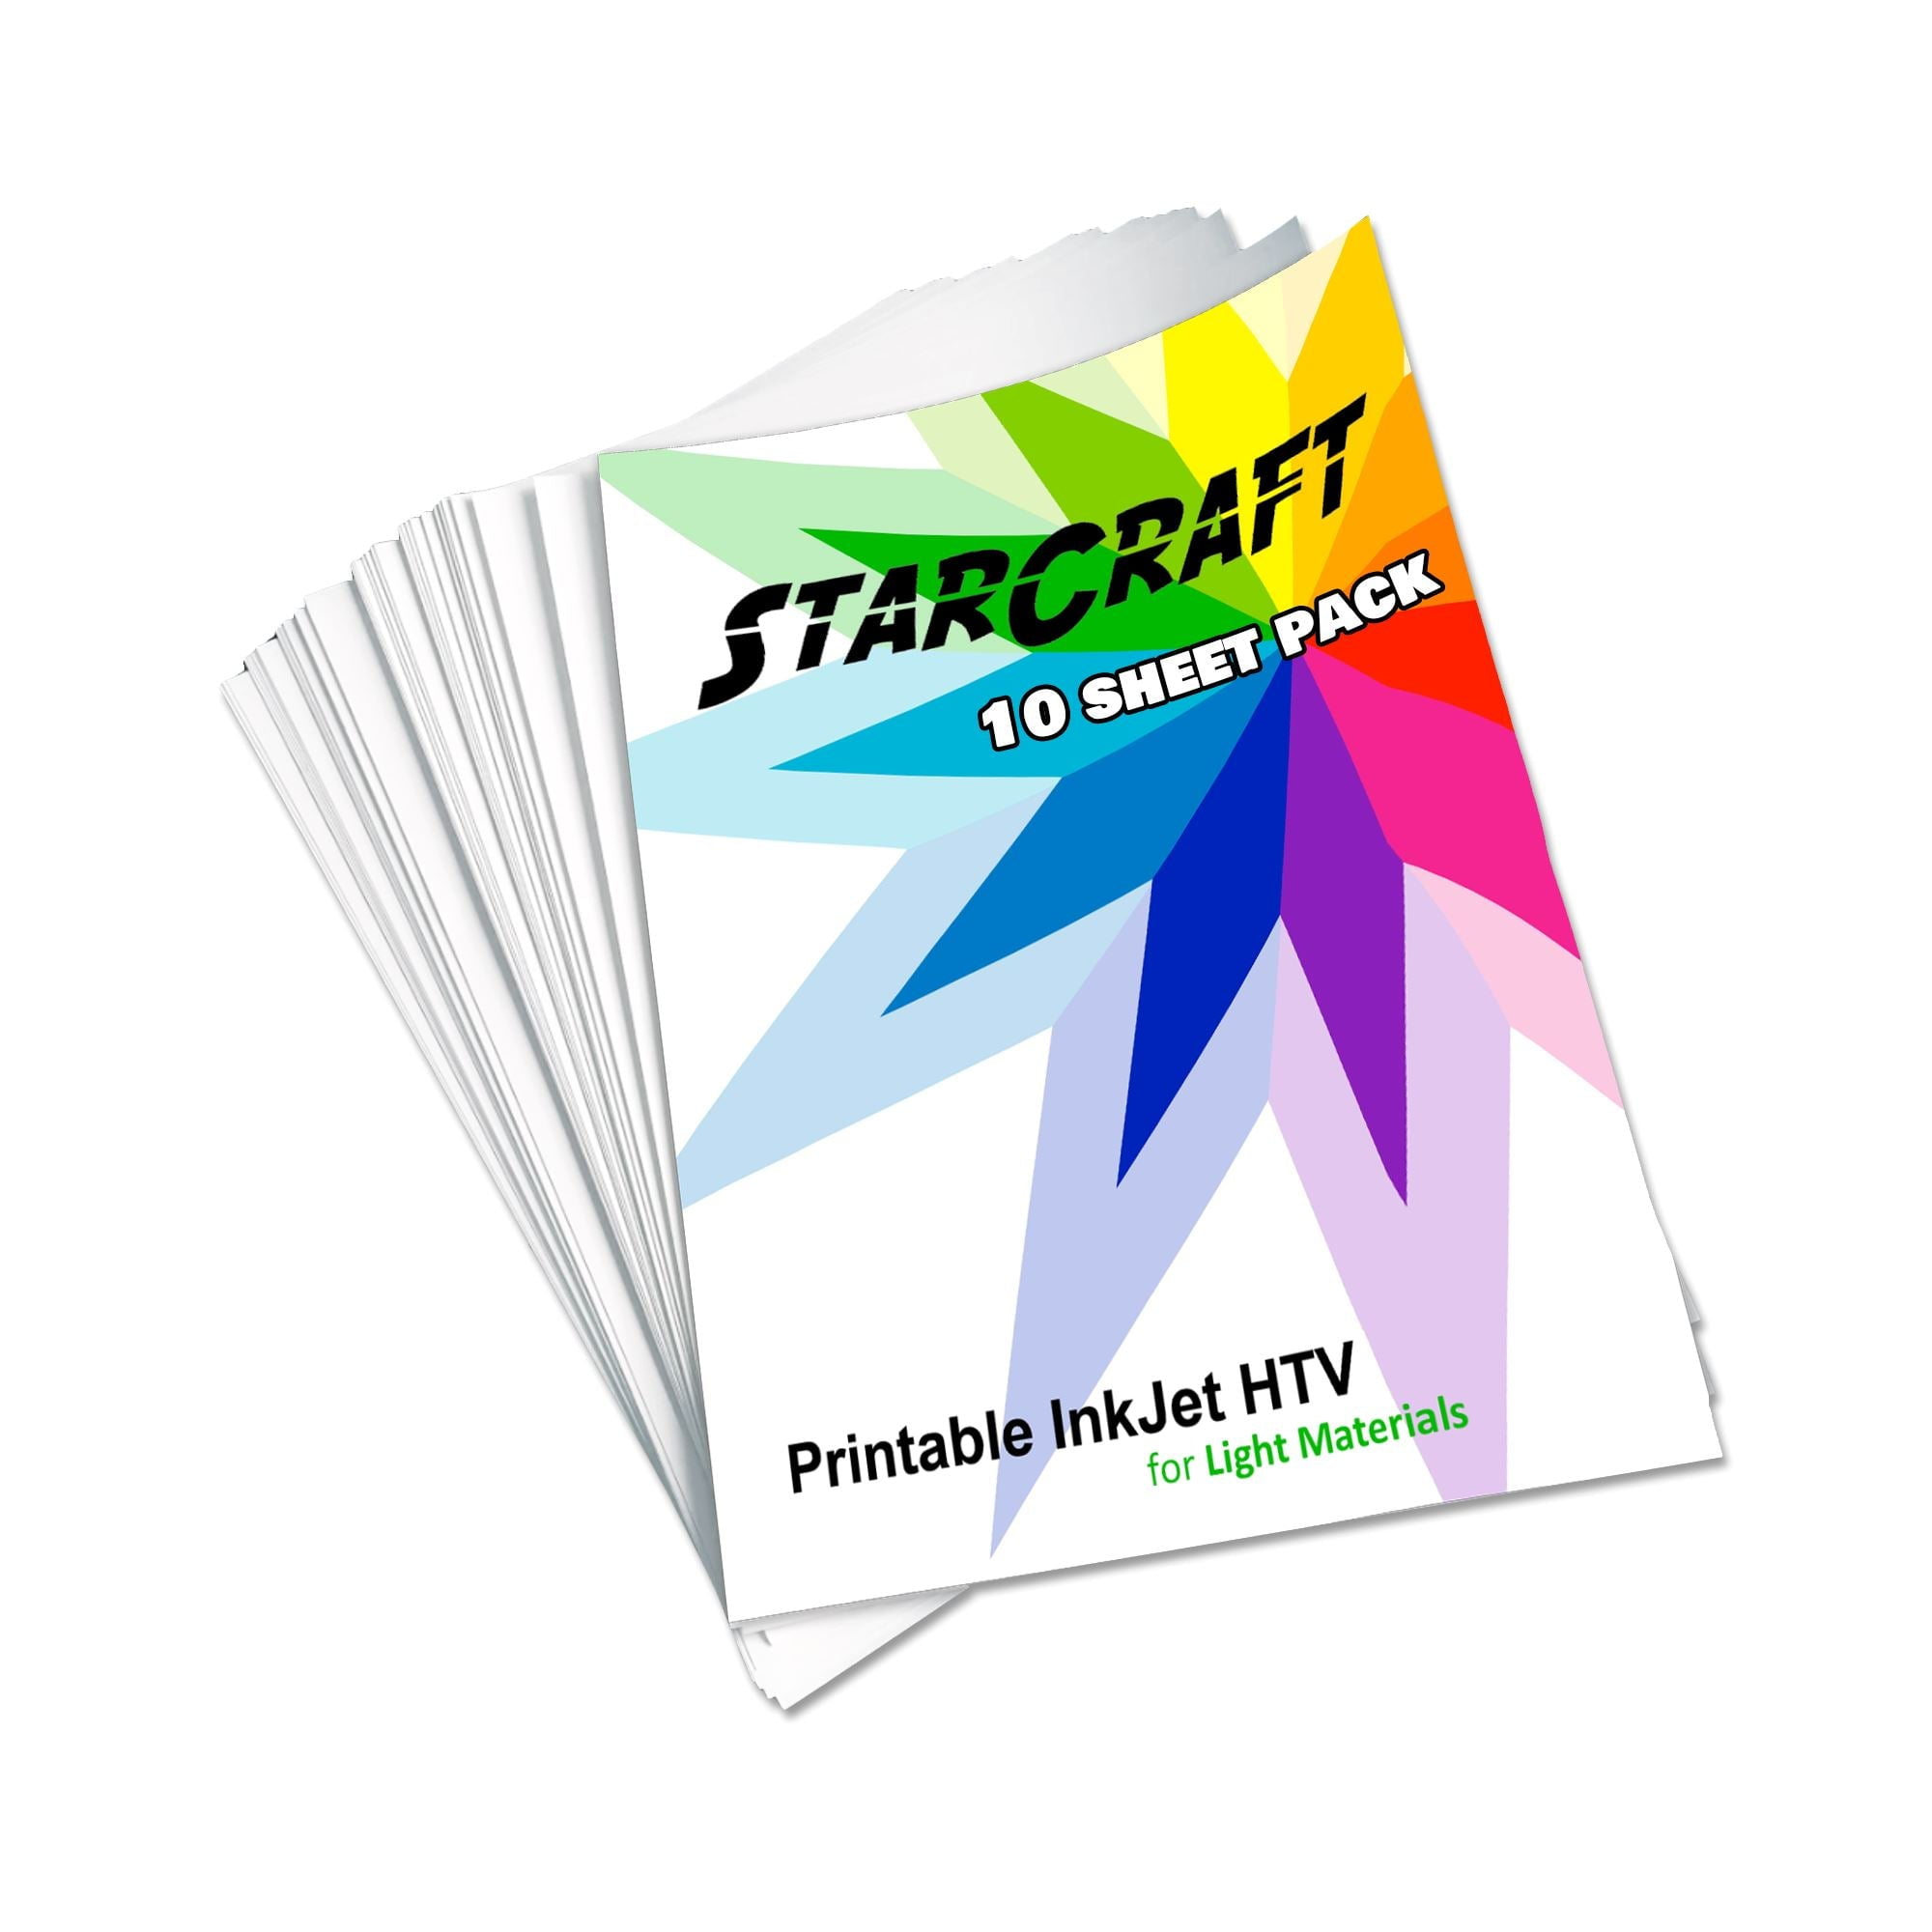 StarCraft Inkjet Printable Heat Transfer 10 Sheet Pack - Light Materials 